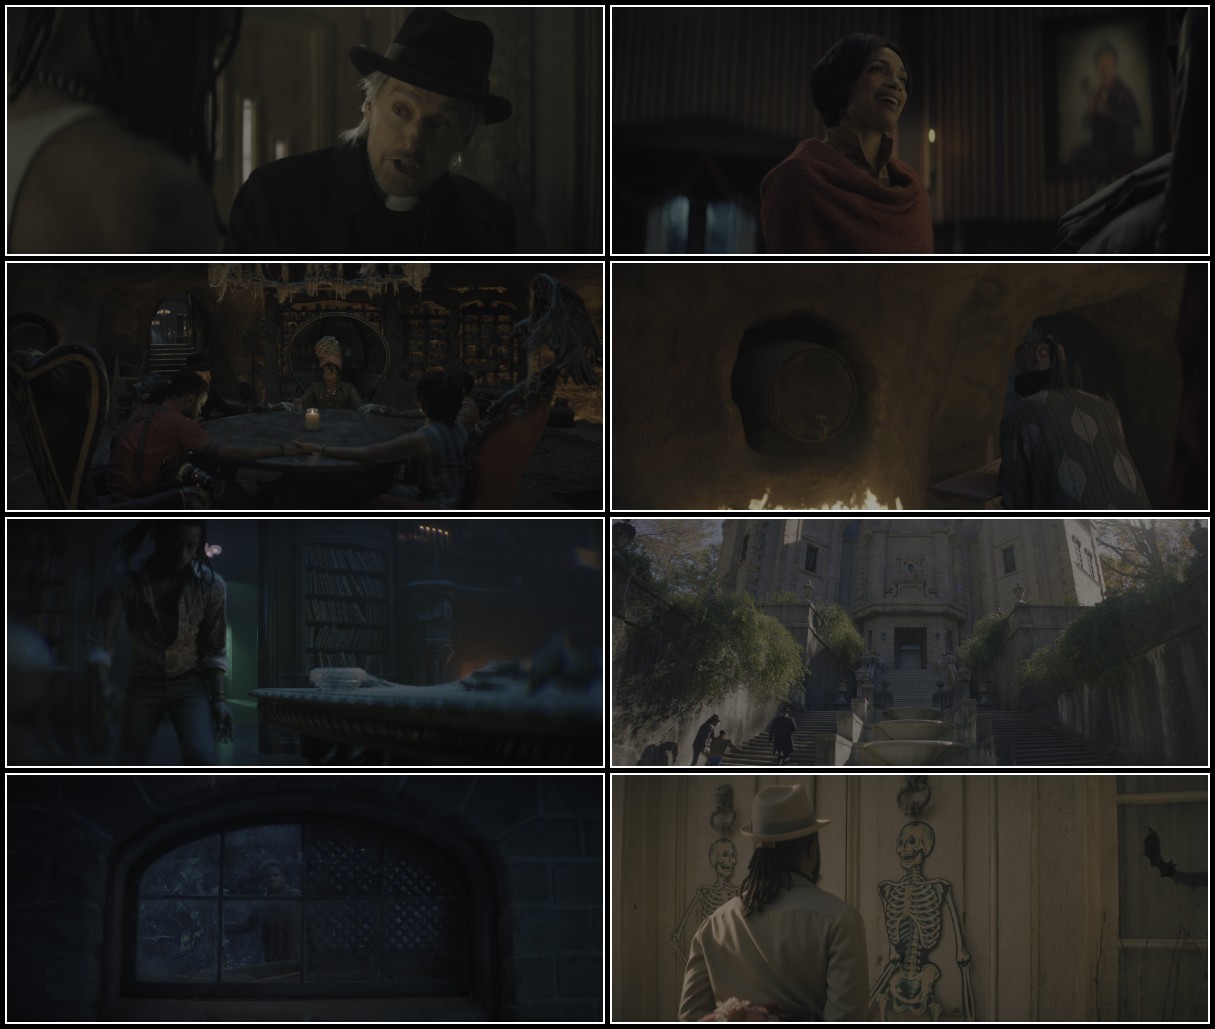 Haunted Mansion (2023) 4K UHD BluRay 2160p DoVi HDR TrueHD 7 1 Atmos H 265-MgB